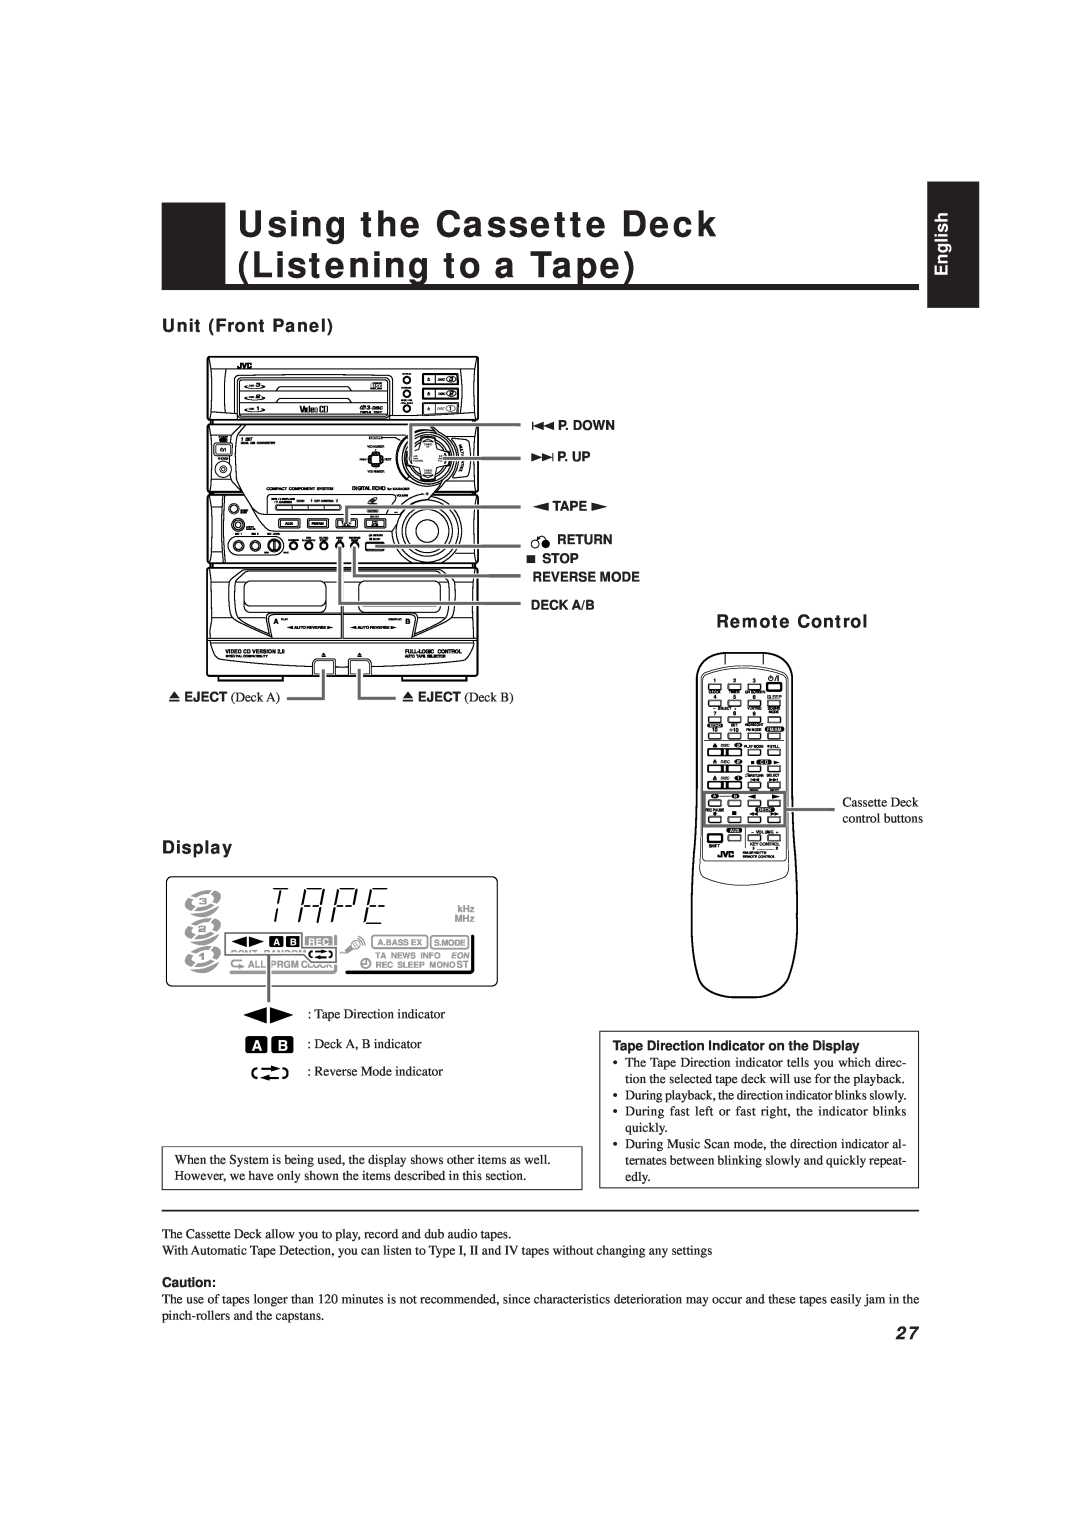 JVC MX-V588T, MX-V508T manual Using the Cassette Deck Listening to a Tape, English, 4 P. DOWN ¢ P. UP ª TAPE £ 